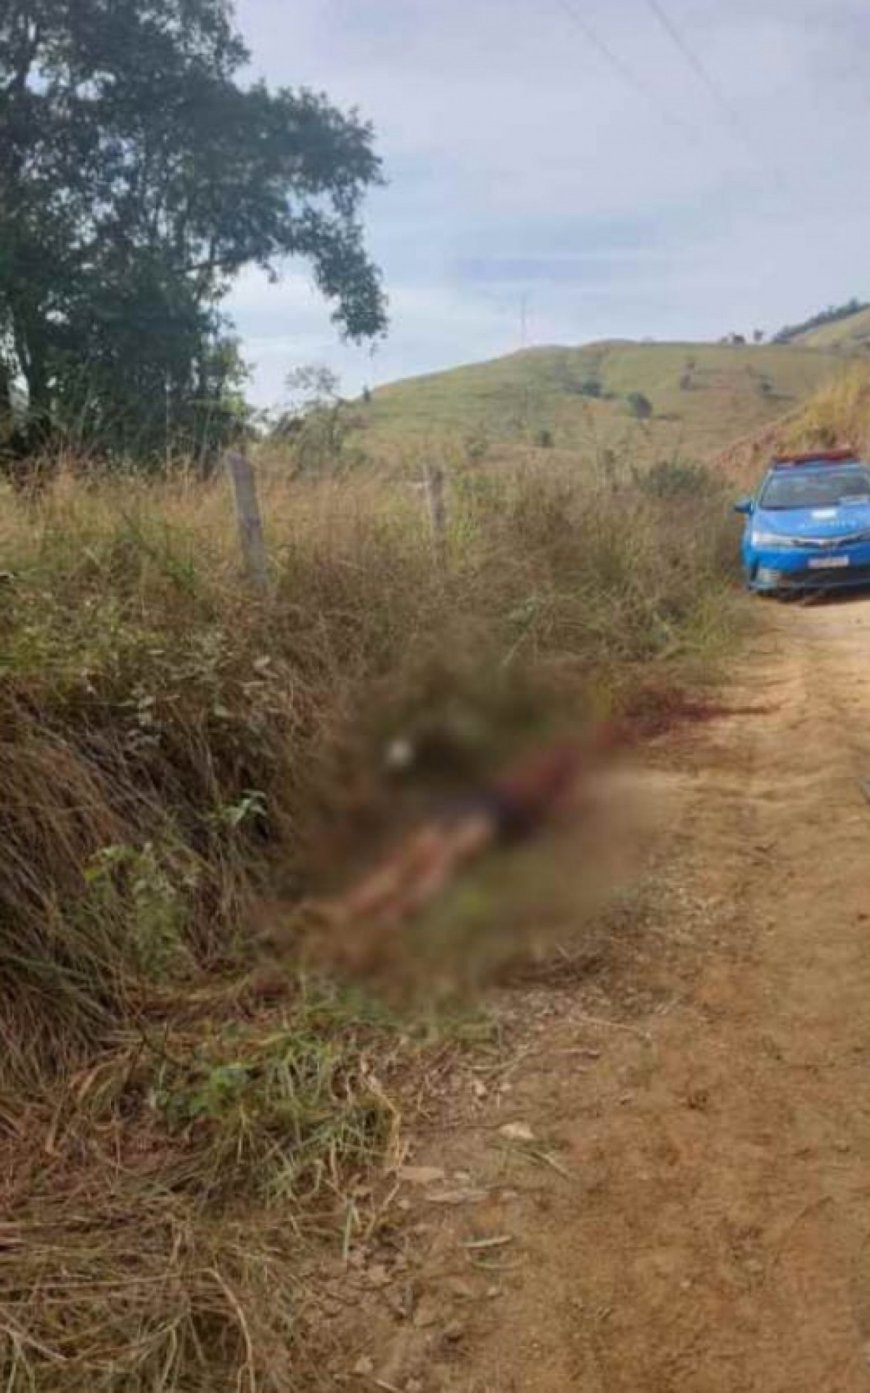 Crime brutal choca comunidade local na Estrada do Bambuí